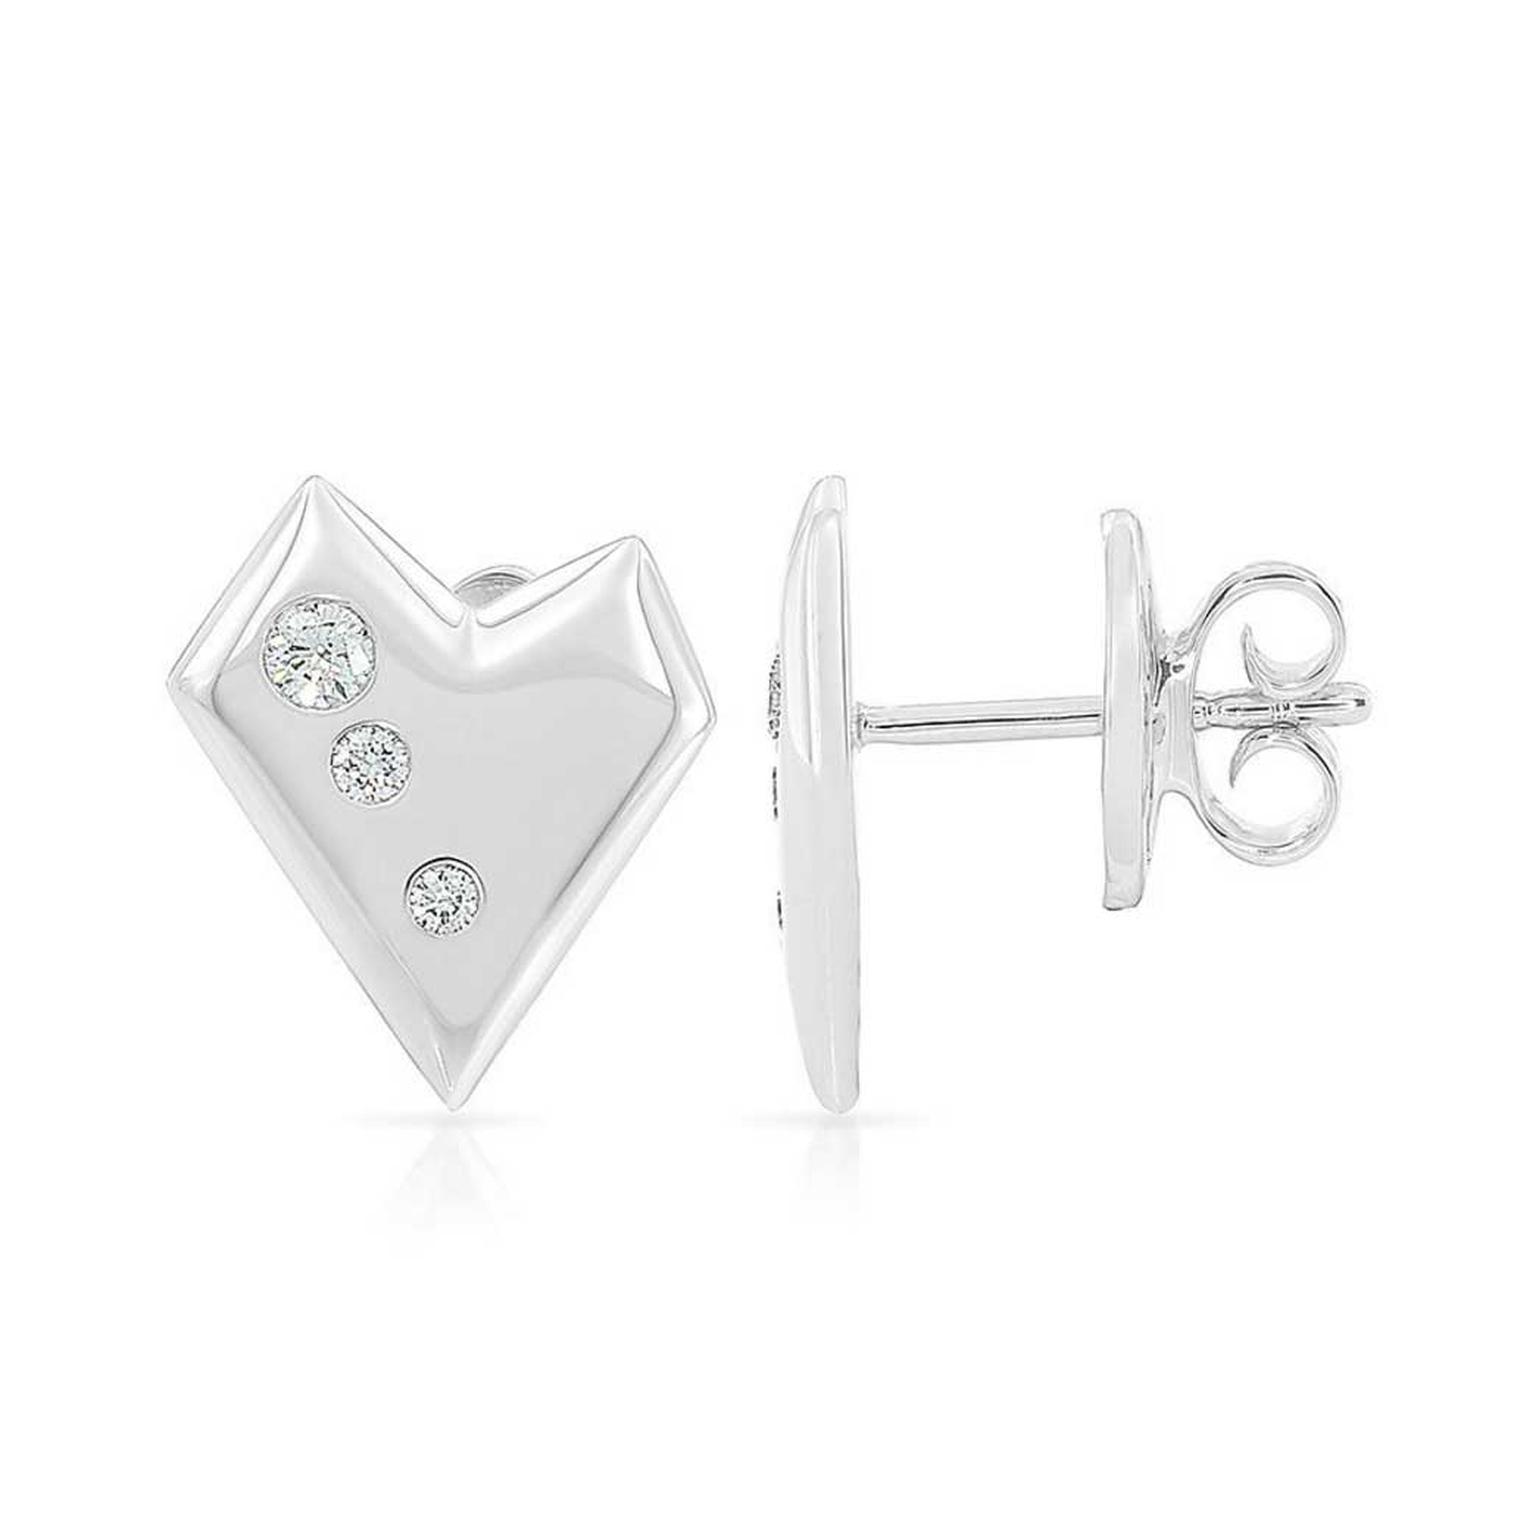 Kat Florence True Romance diamond stud earrings